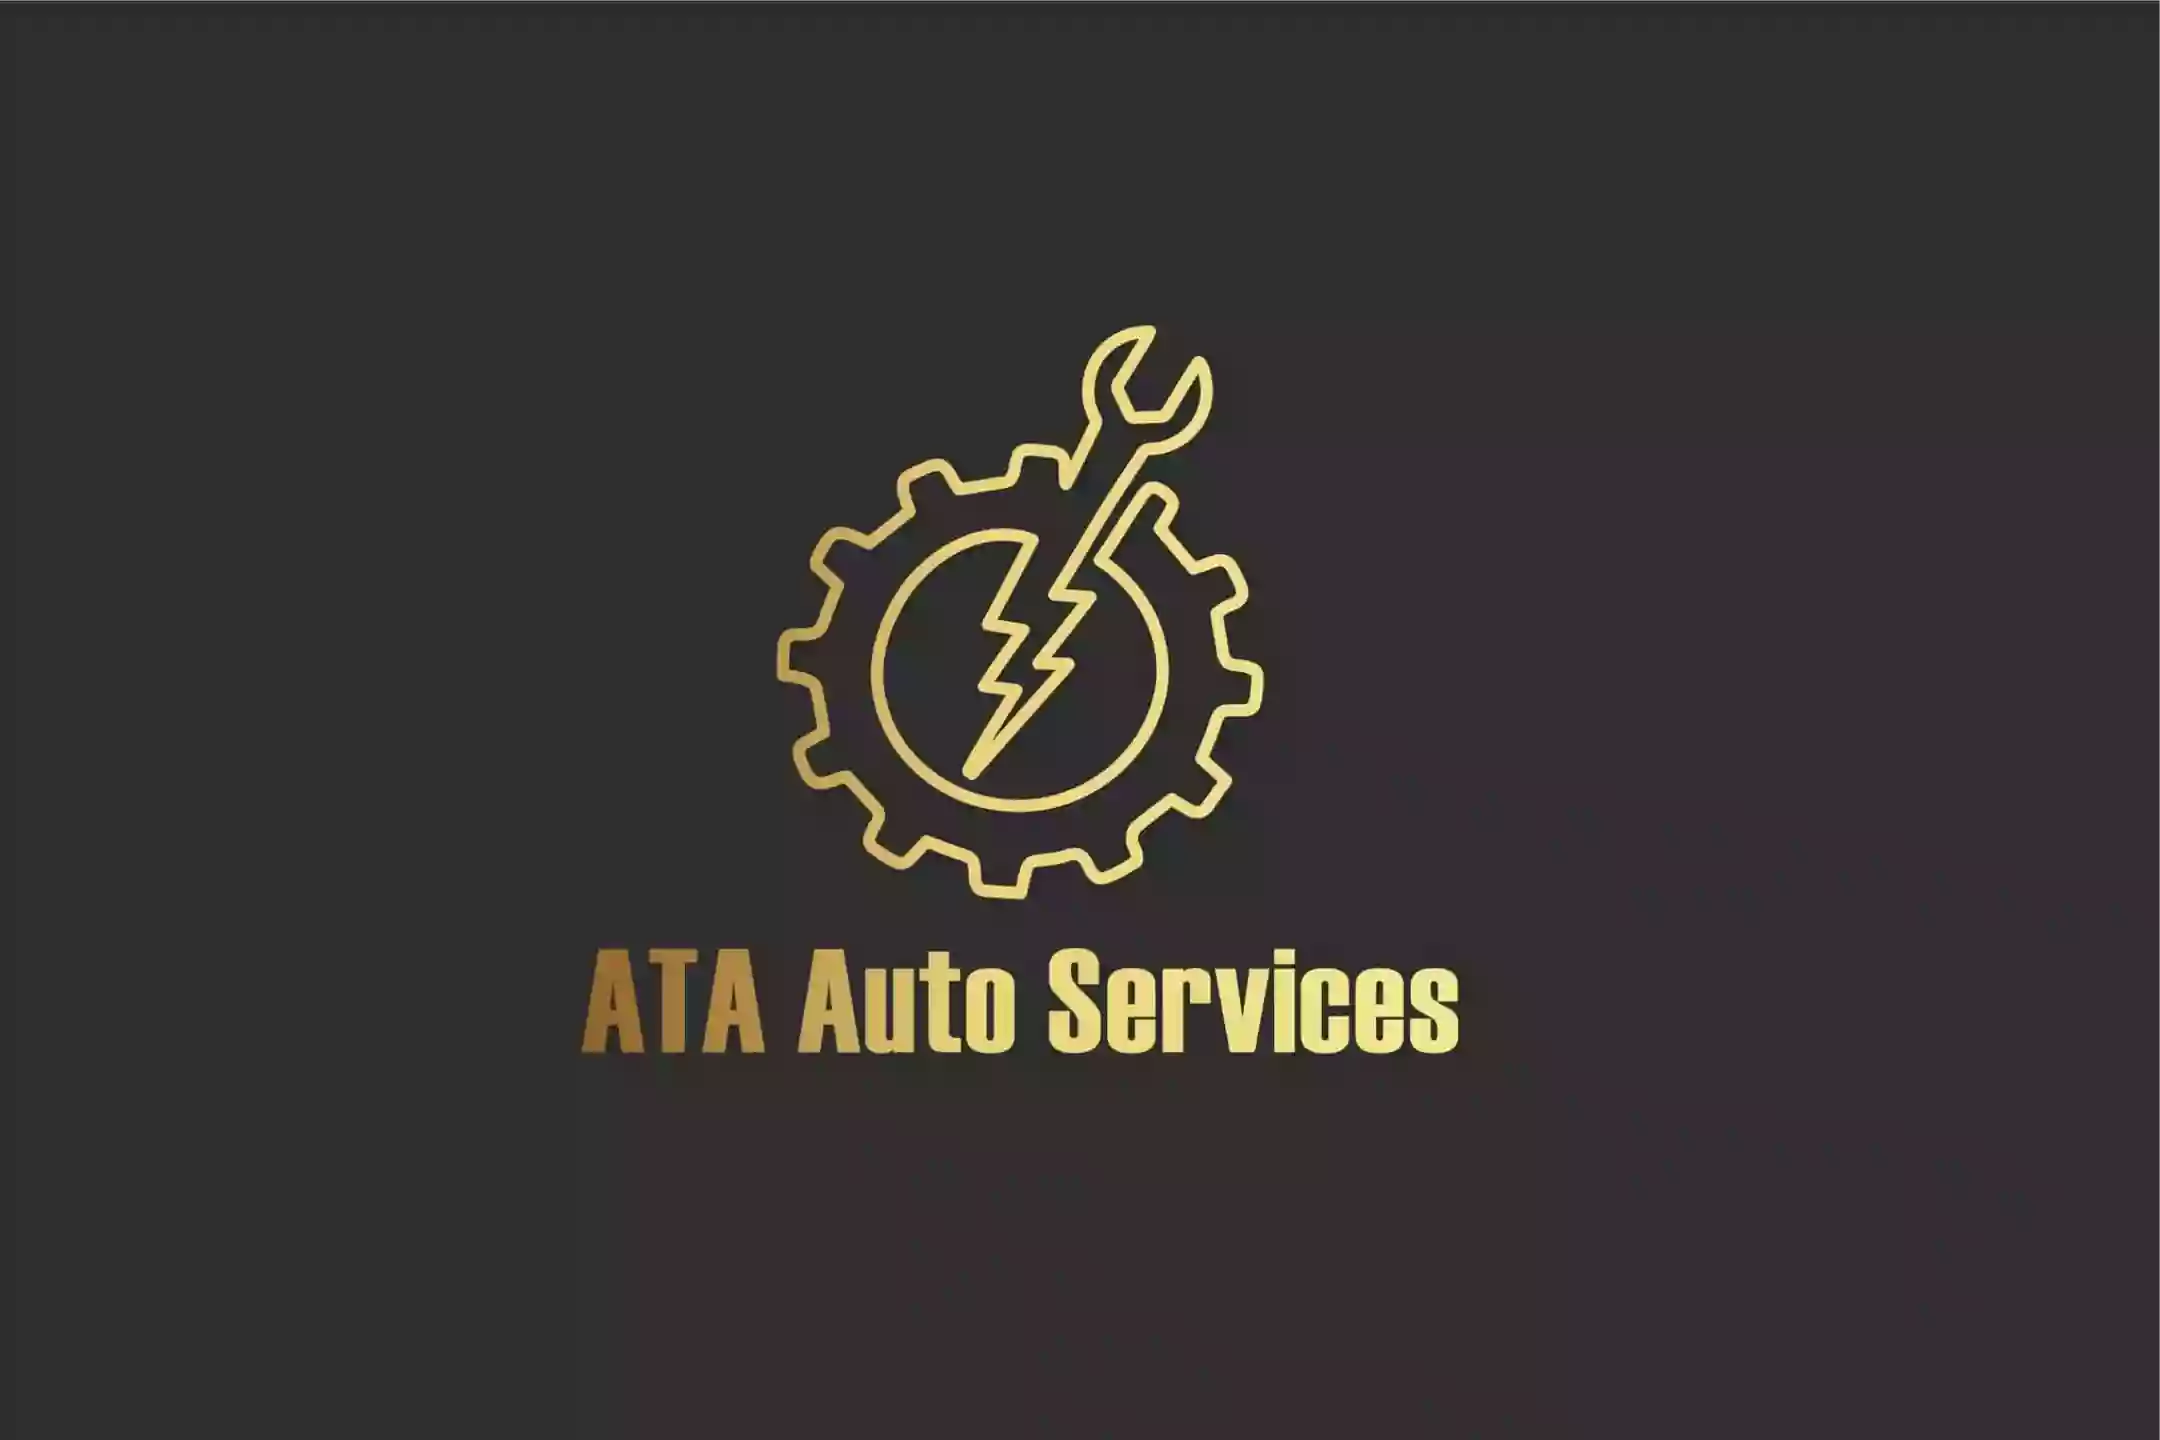 ATA Auto Services